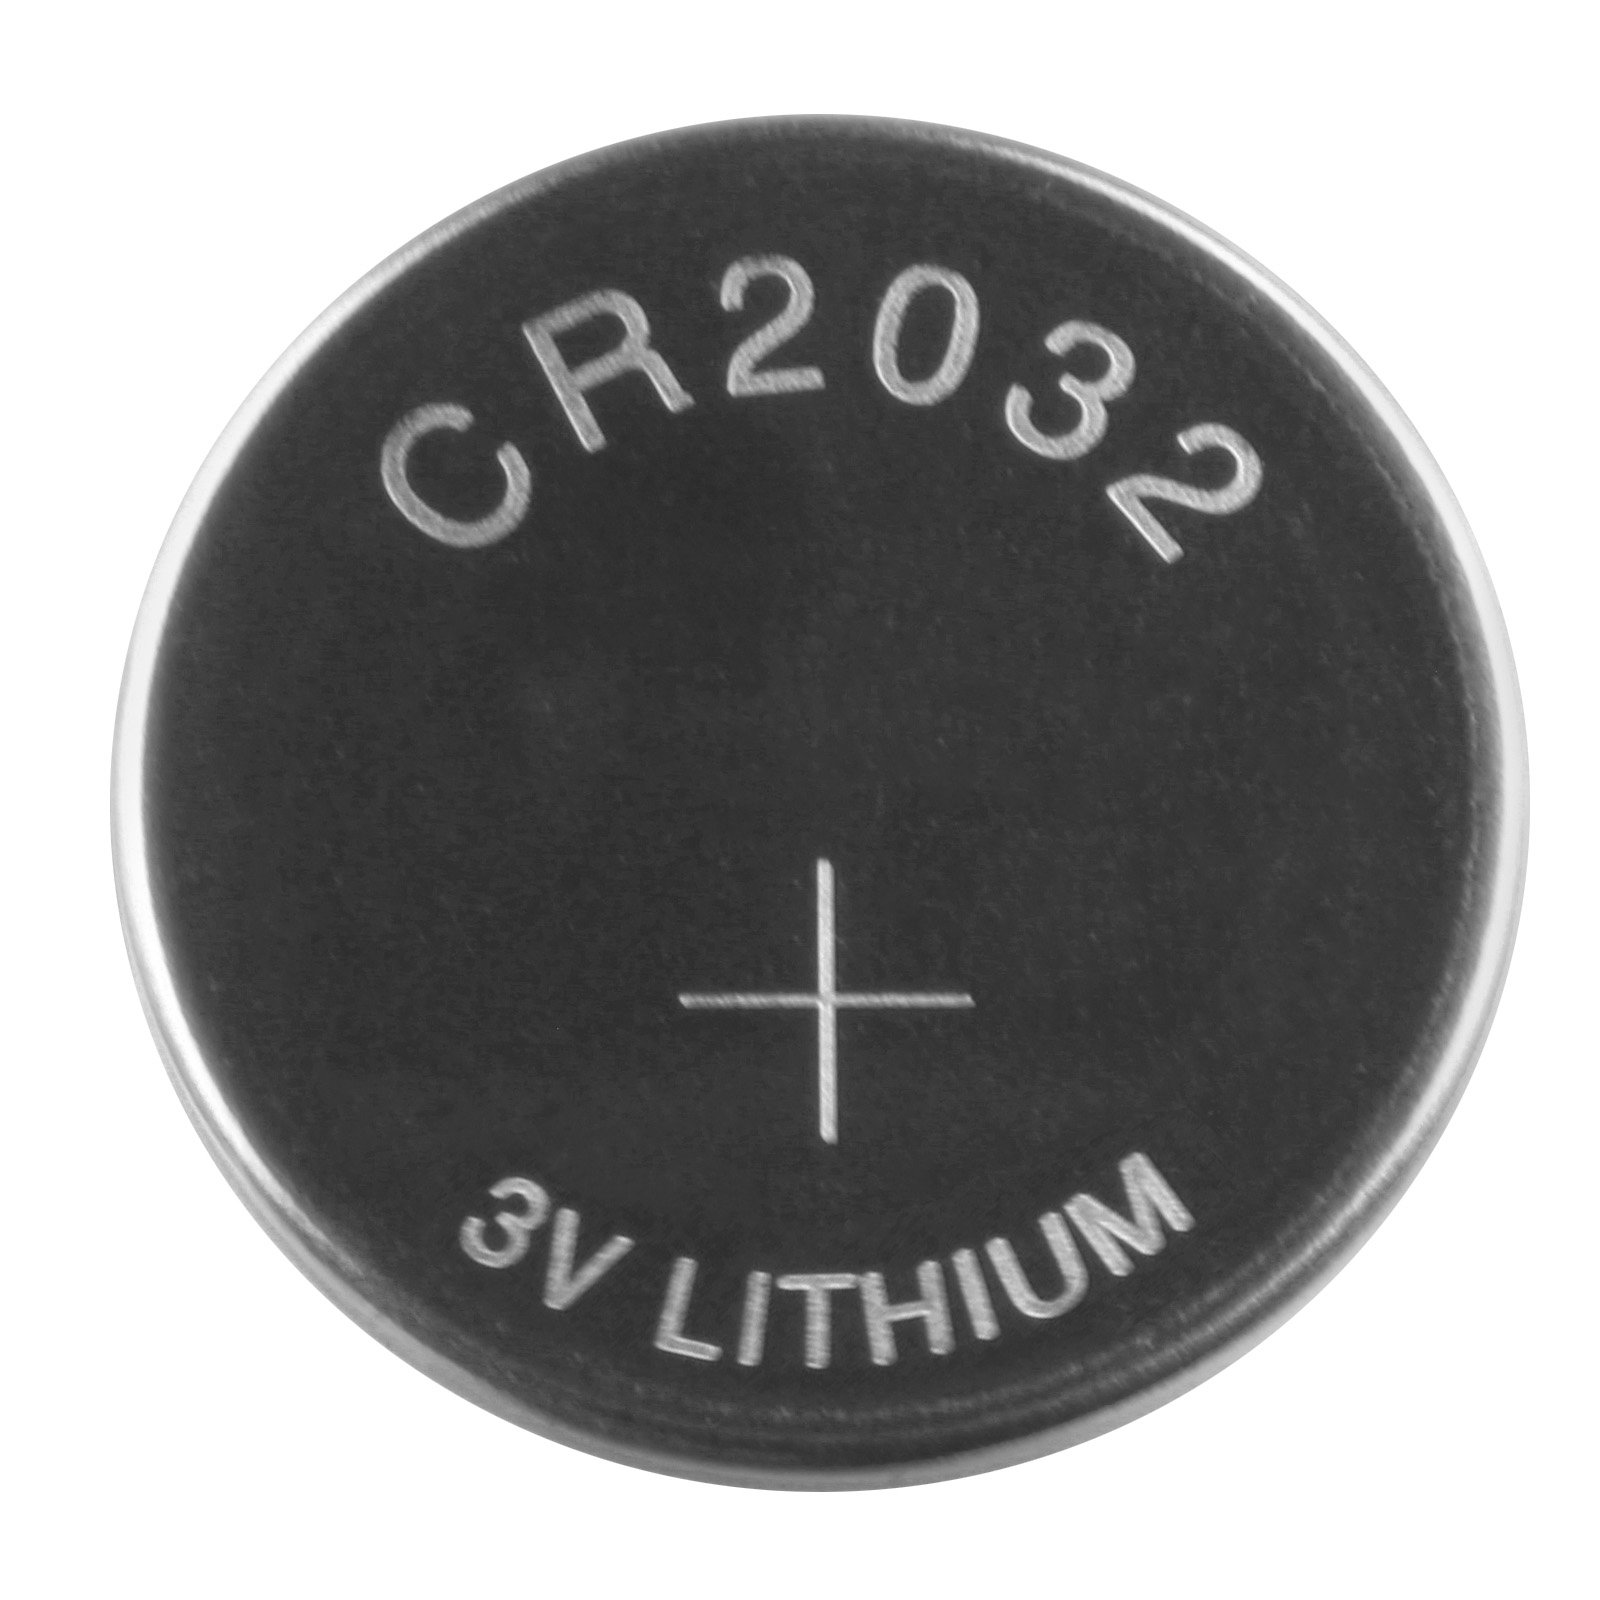 CR 2032 Lithium Battery